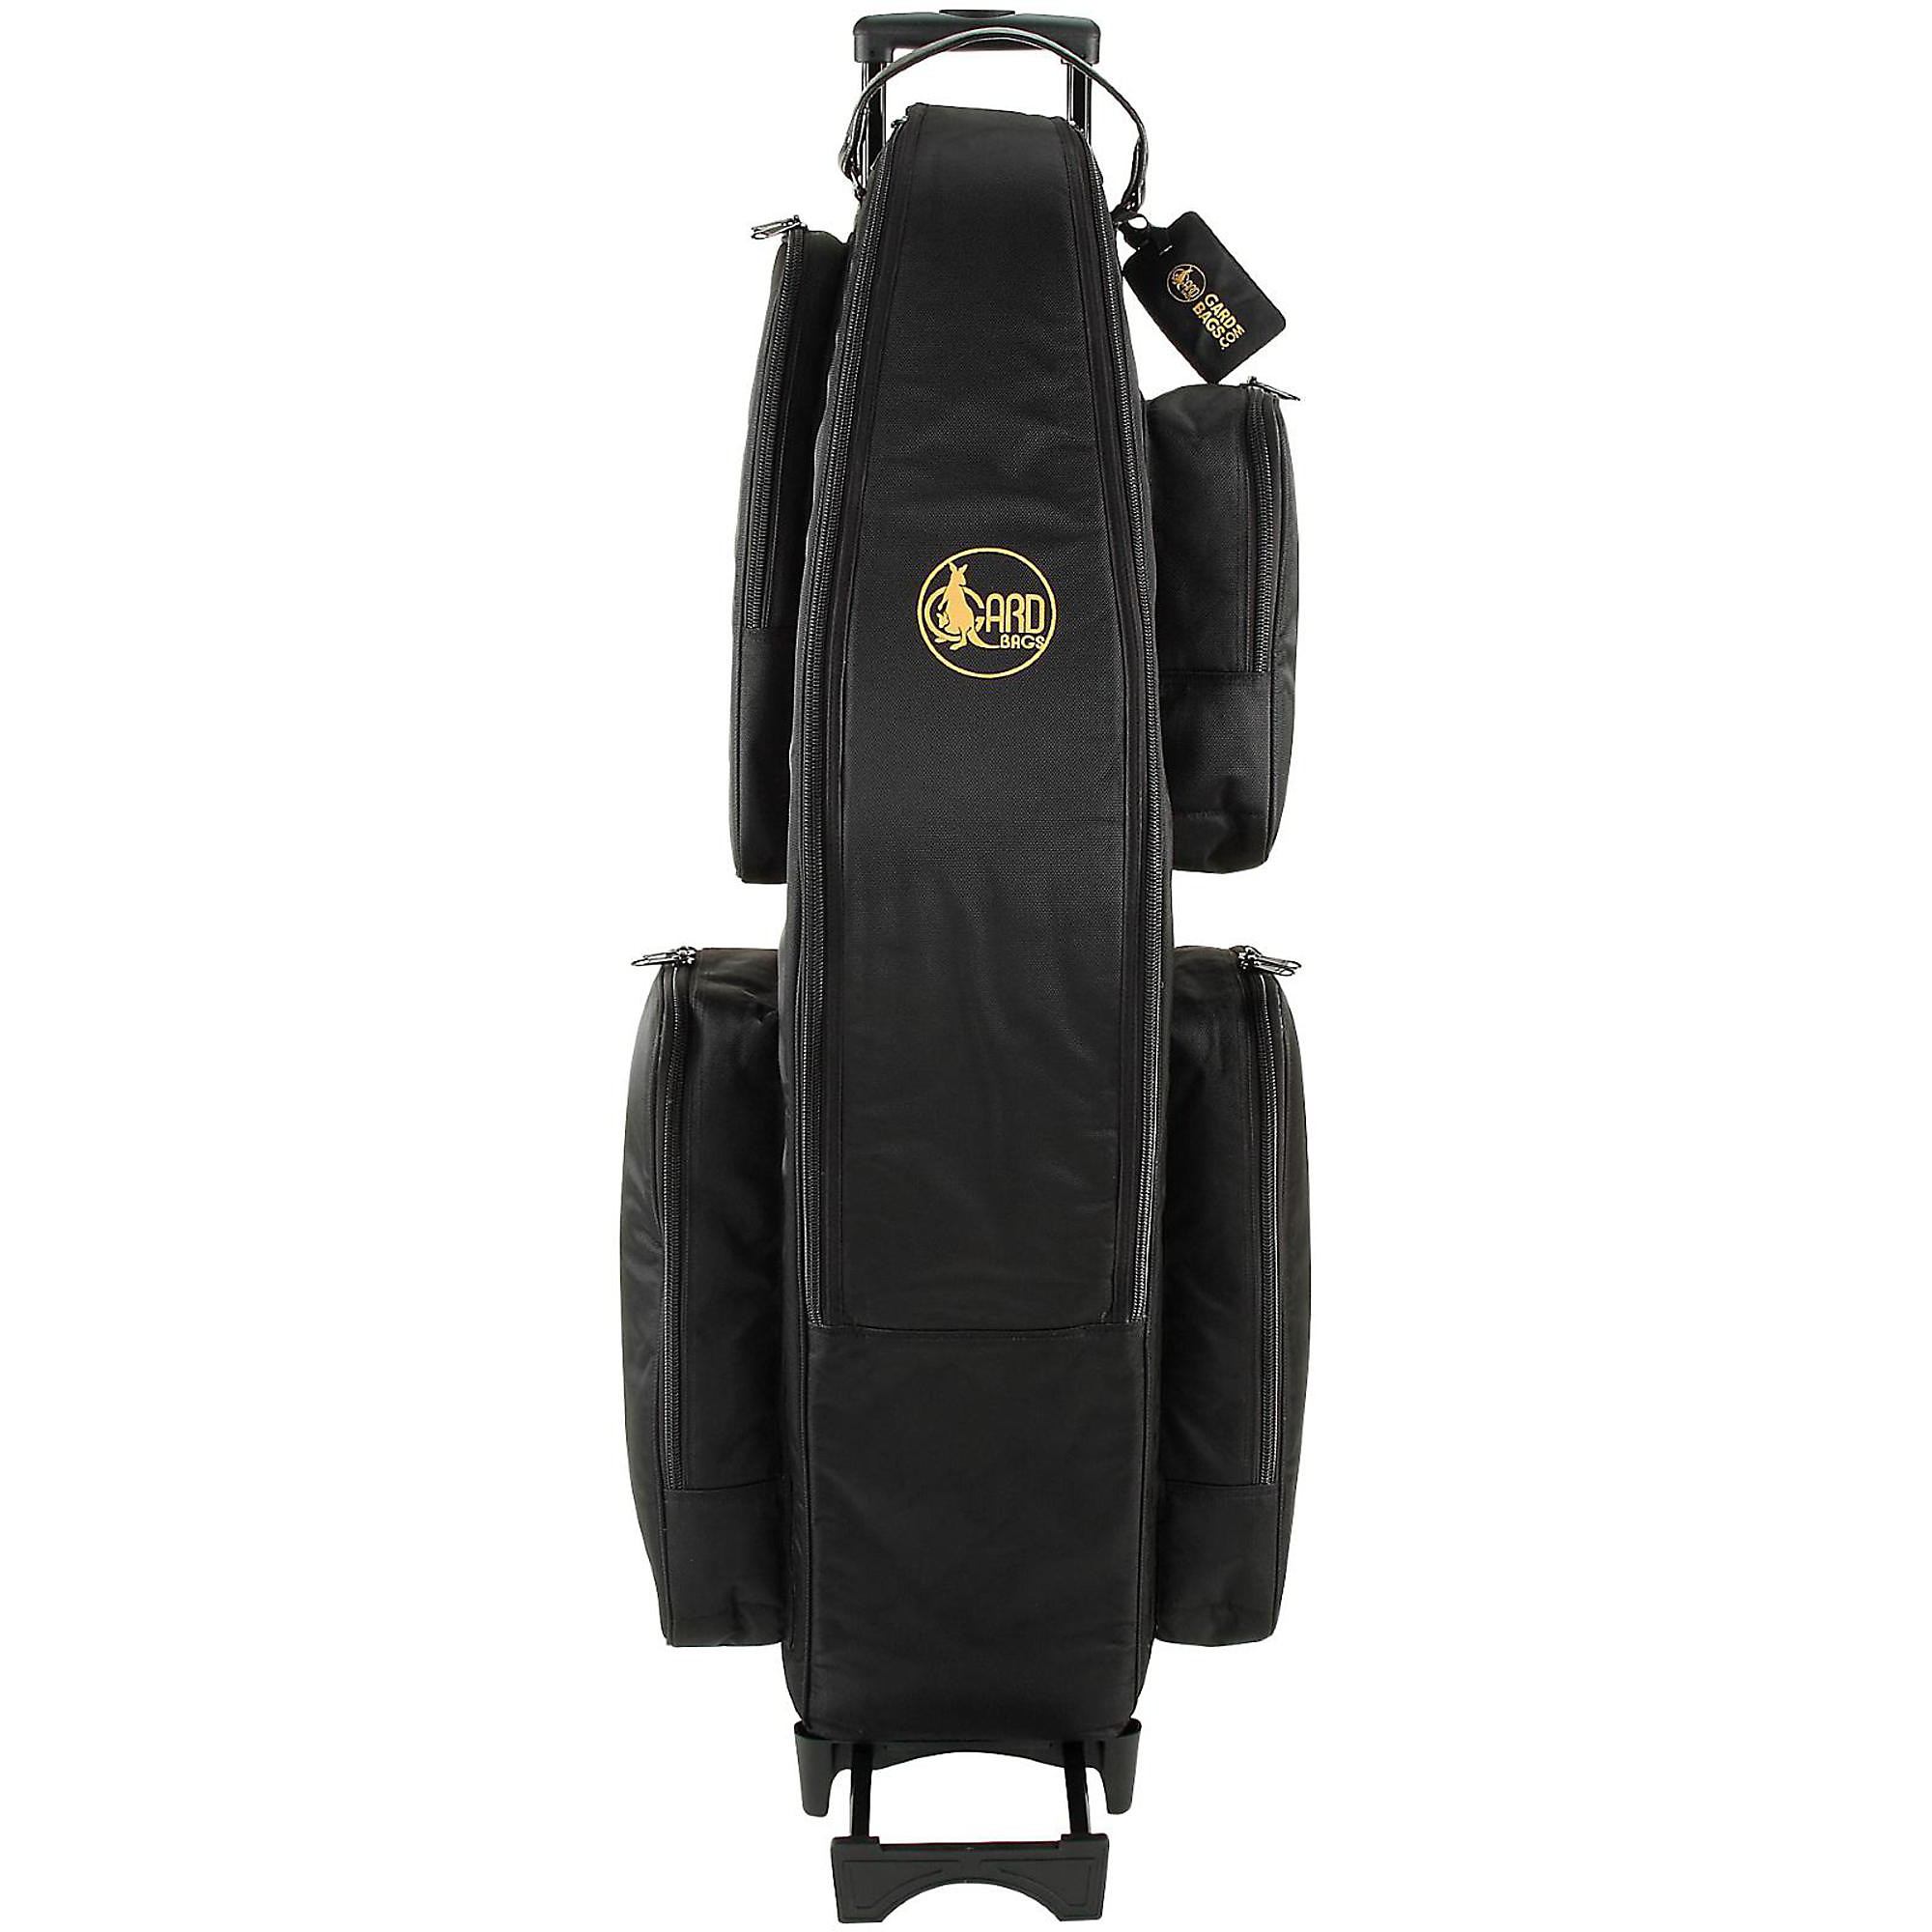 Brand New! Fantastic Gard 1-MLK (M) Single Trumpet Bag in Black Leather! -  Austin Custom Brass Web Store